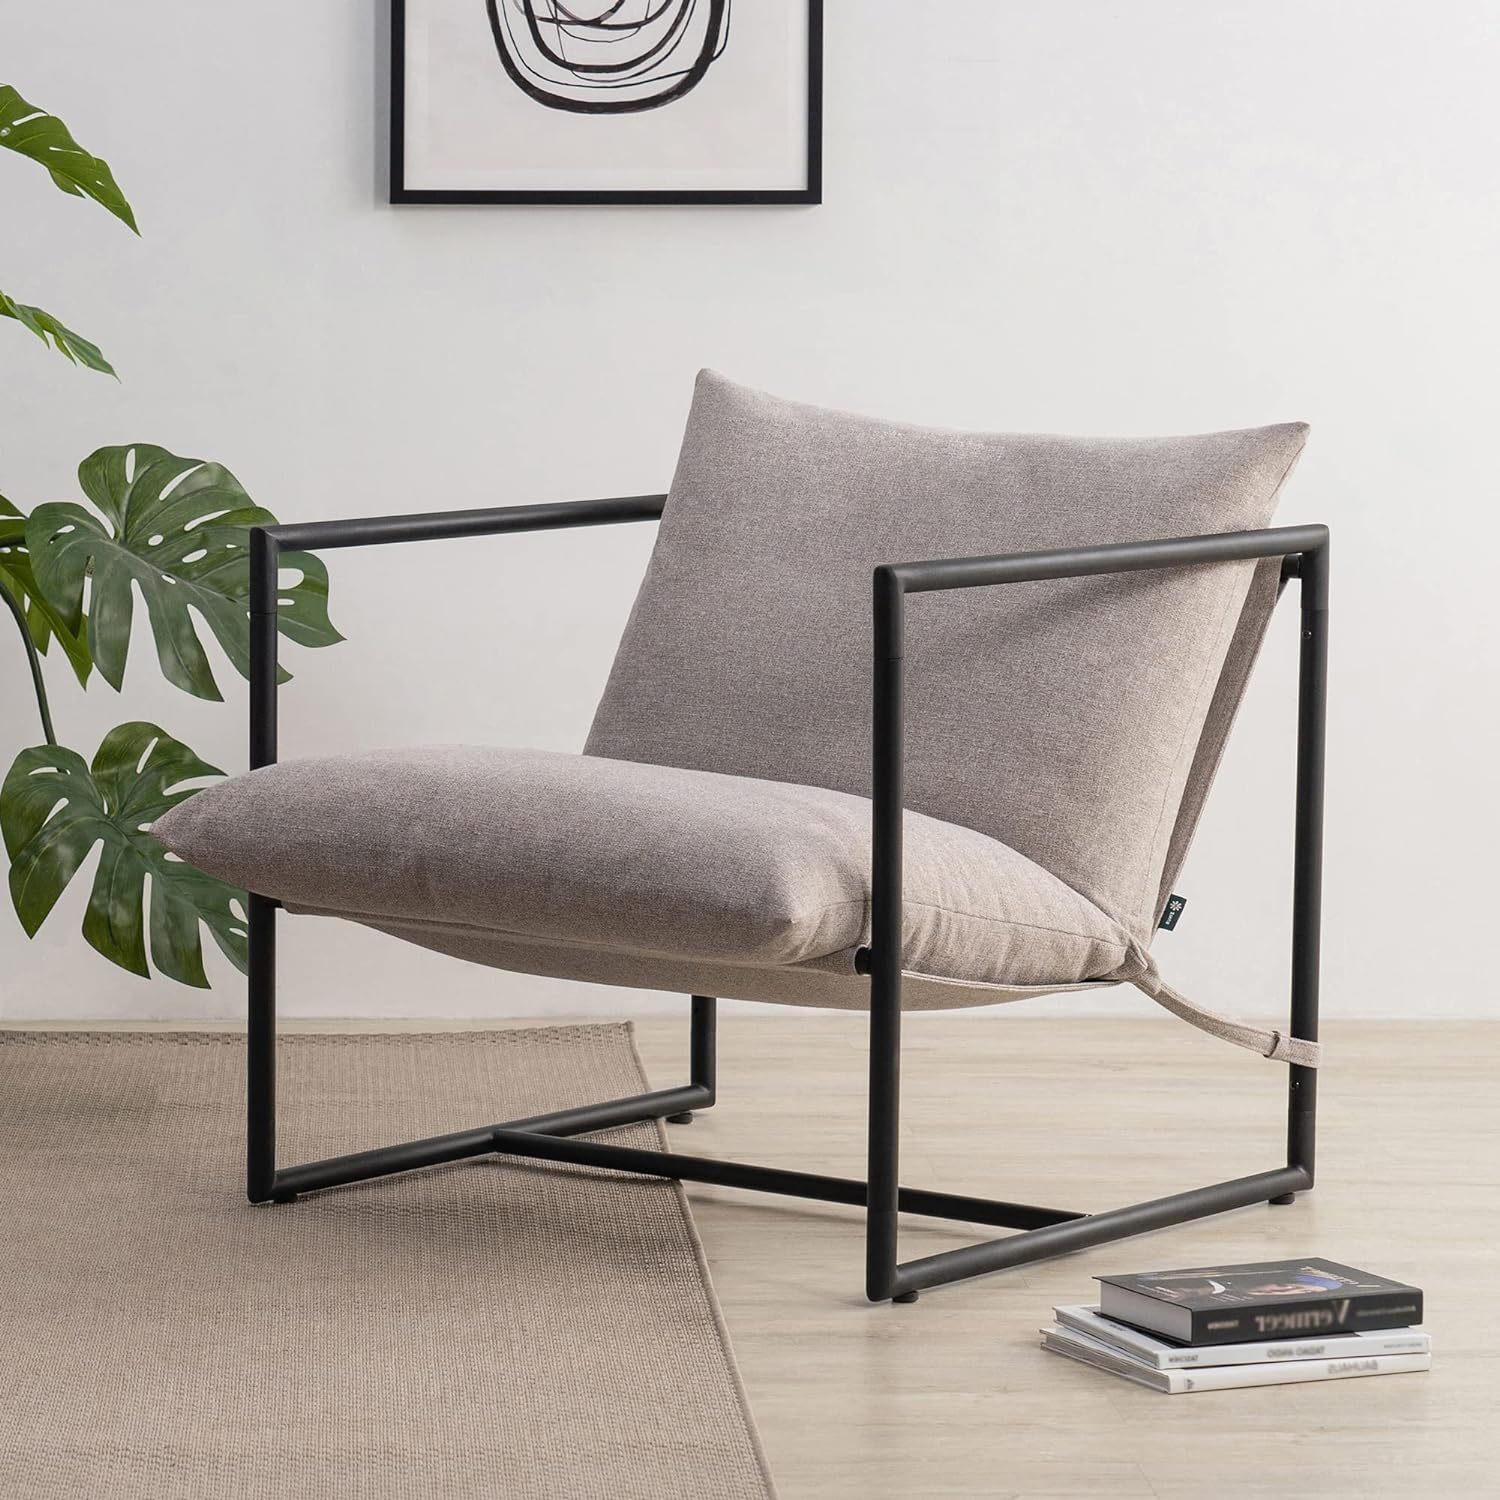 Zinus Aidan Sling Accent Chair / Metal Framed Armchair, Oatmeal, With Shredded - $111.98